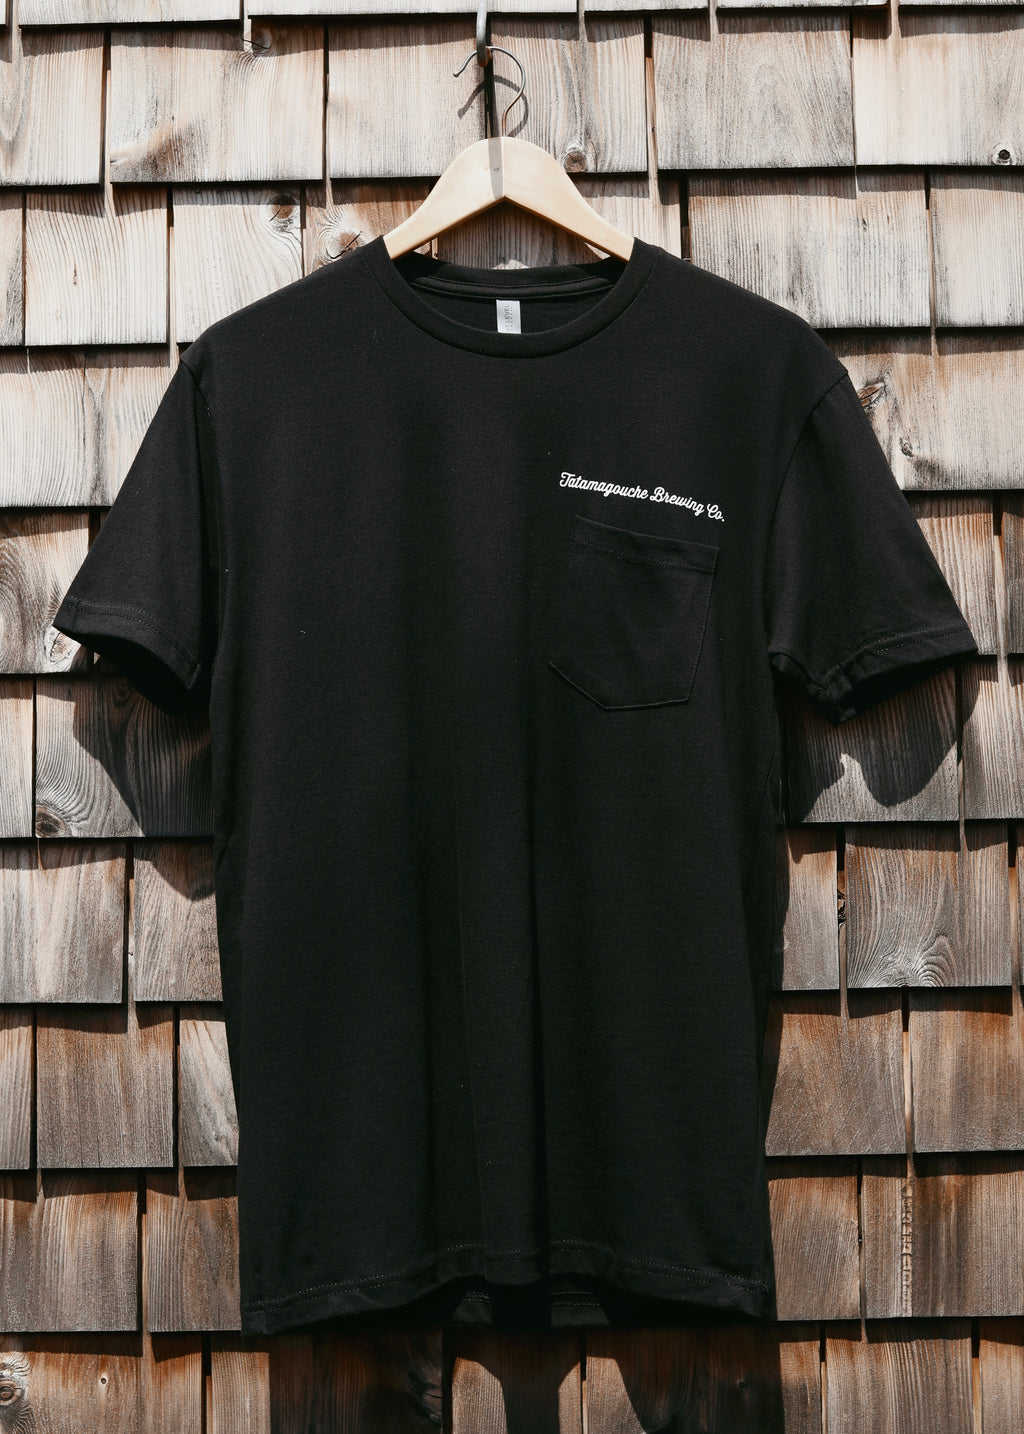 Black Pocket T-Shirt